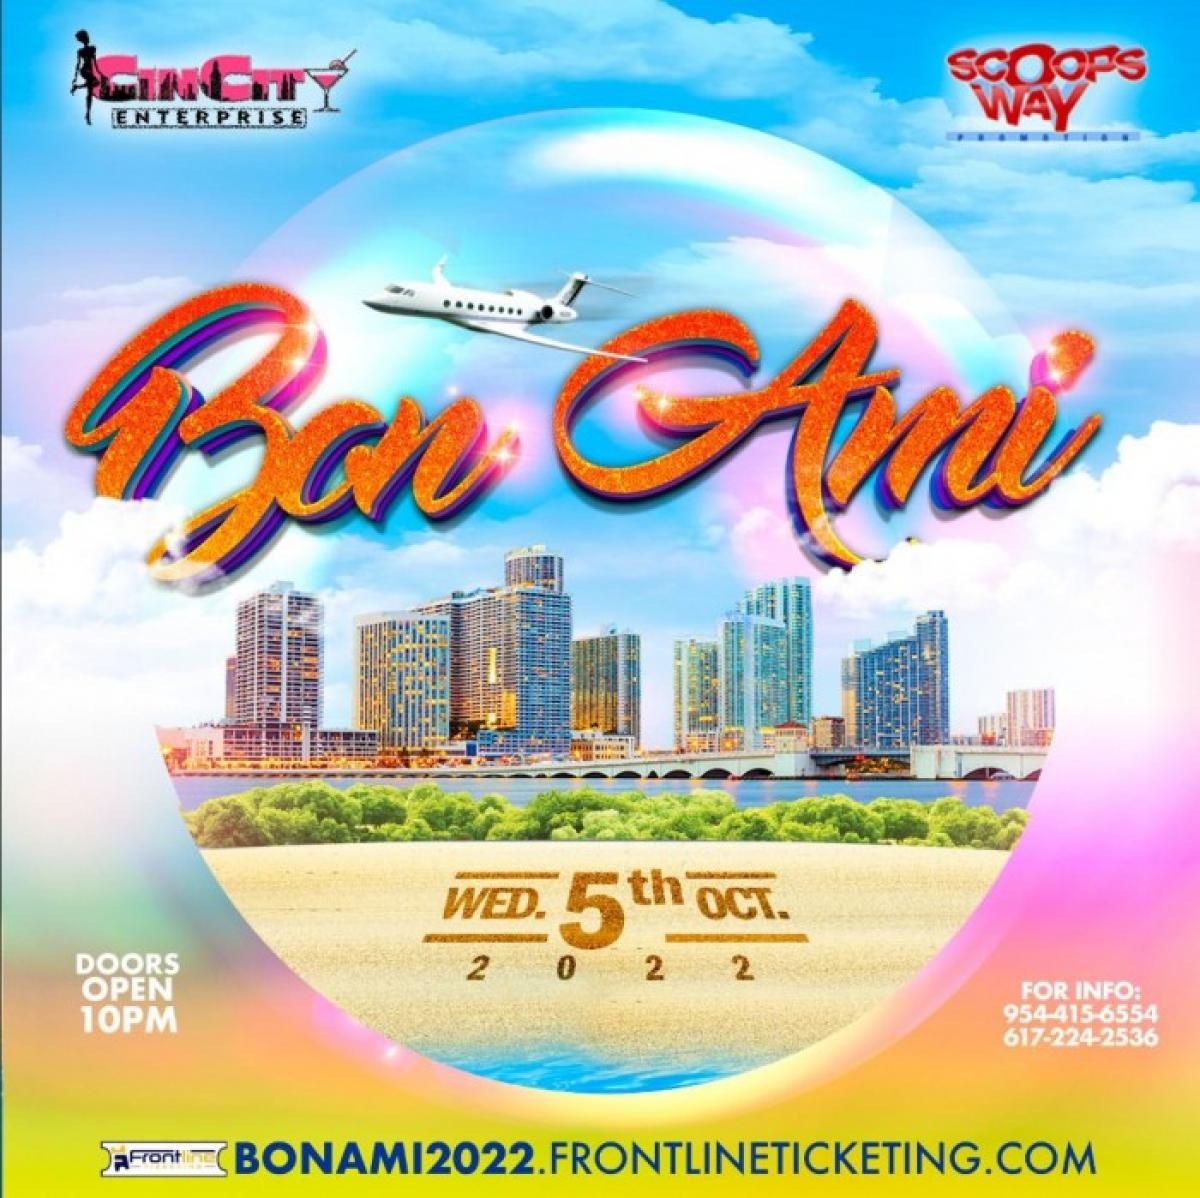 Bon Ami flyer or graphic.